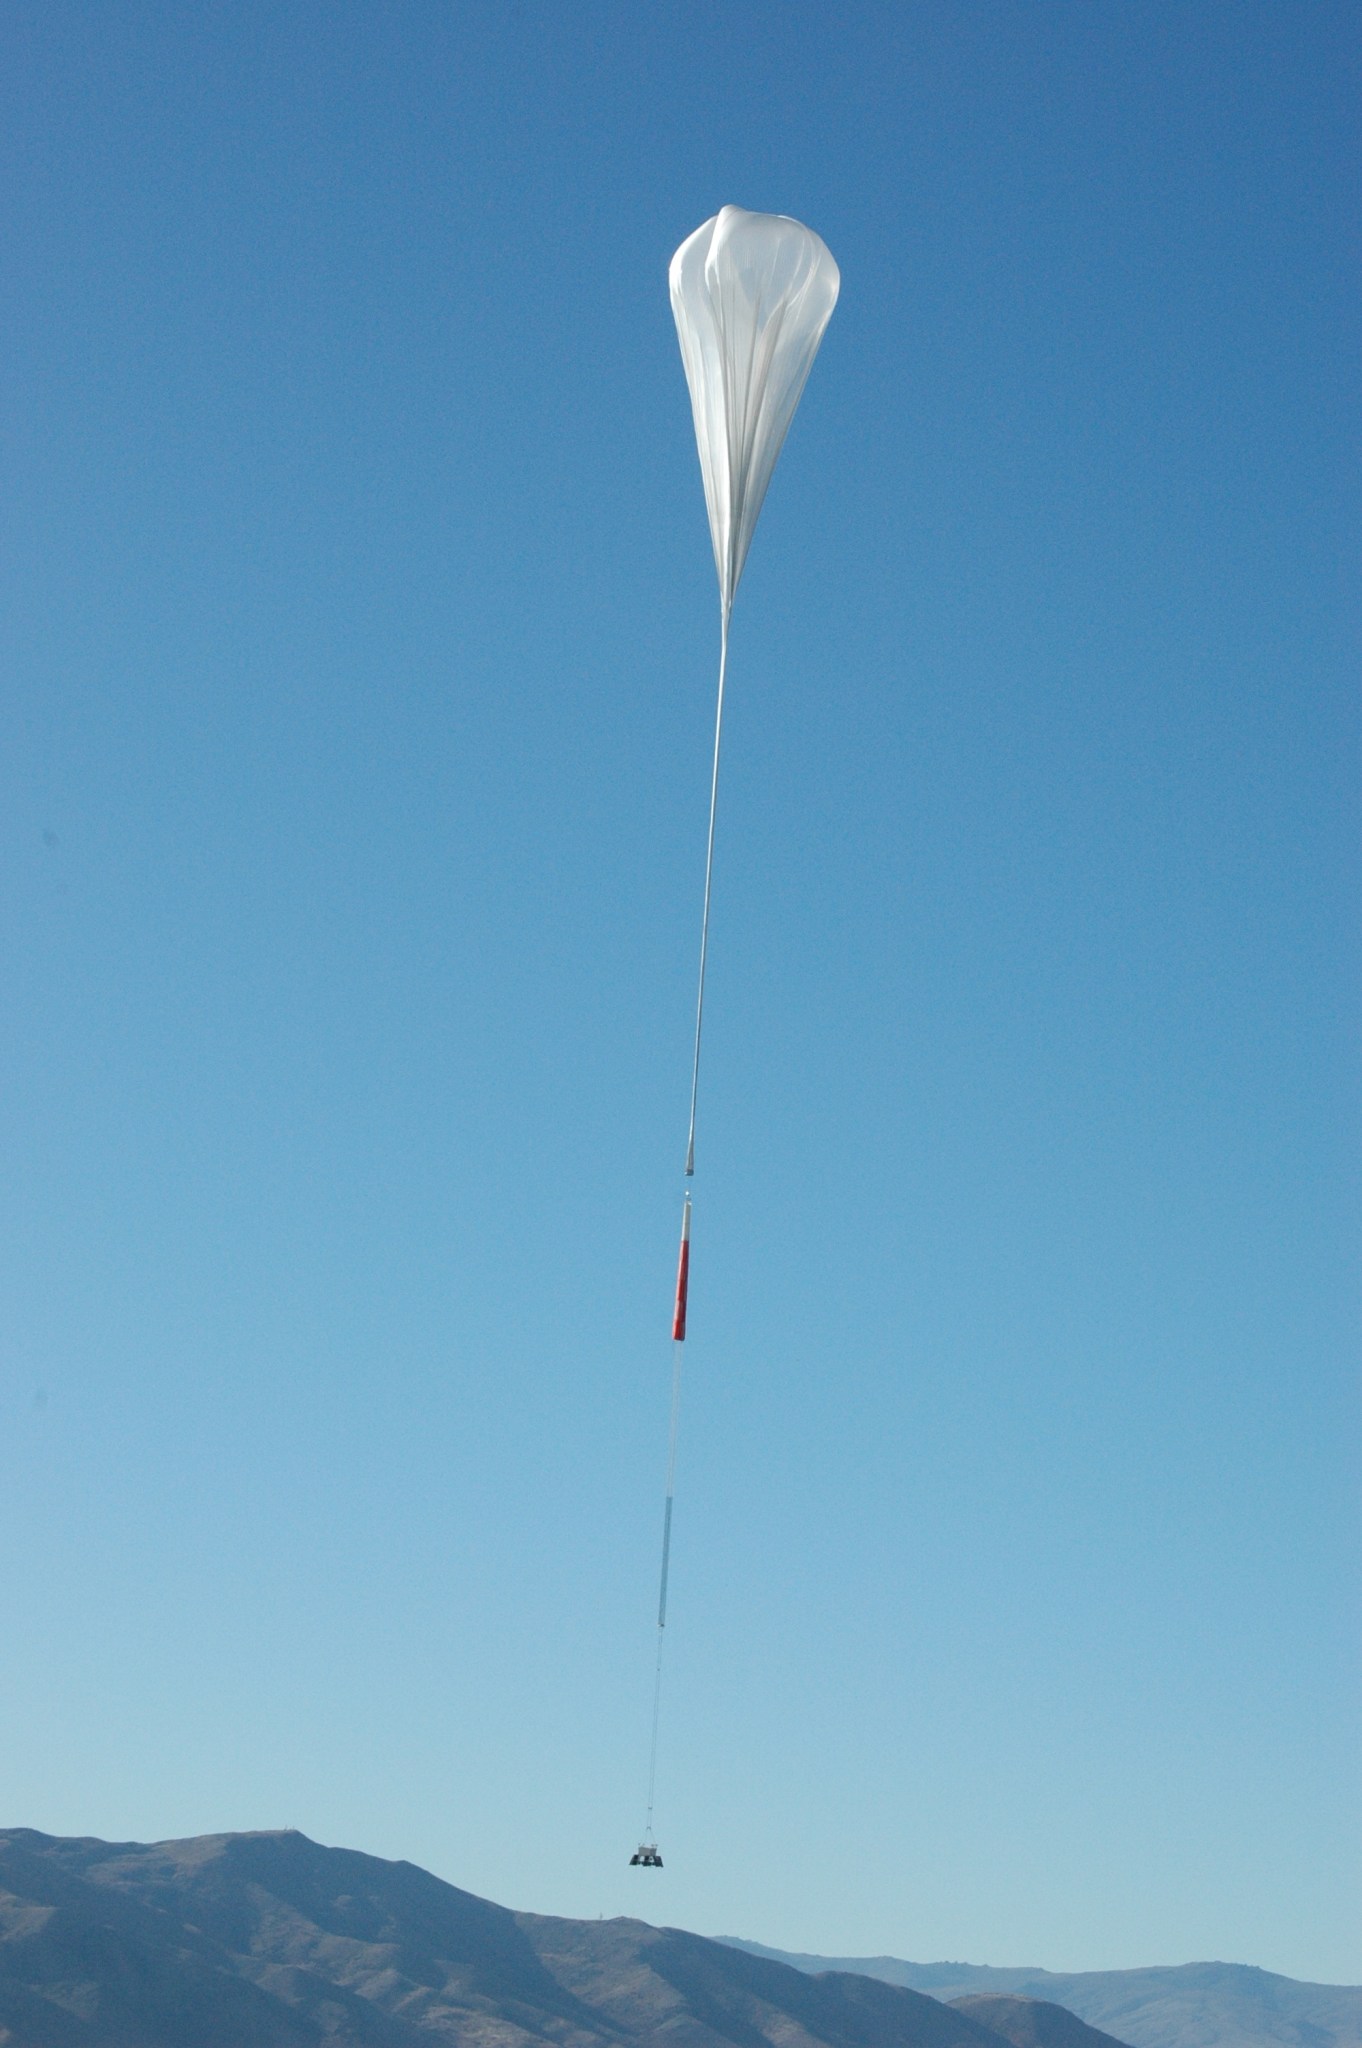 A Super Pressure Balloon takes flight. 